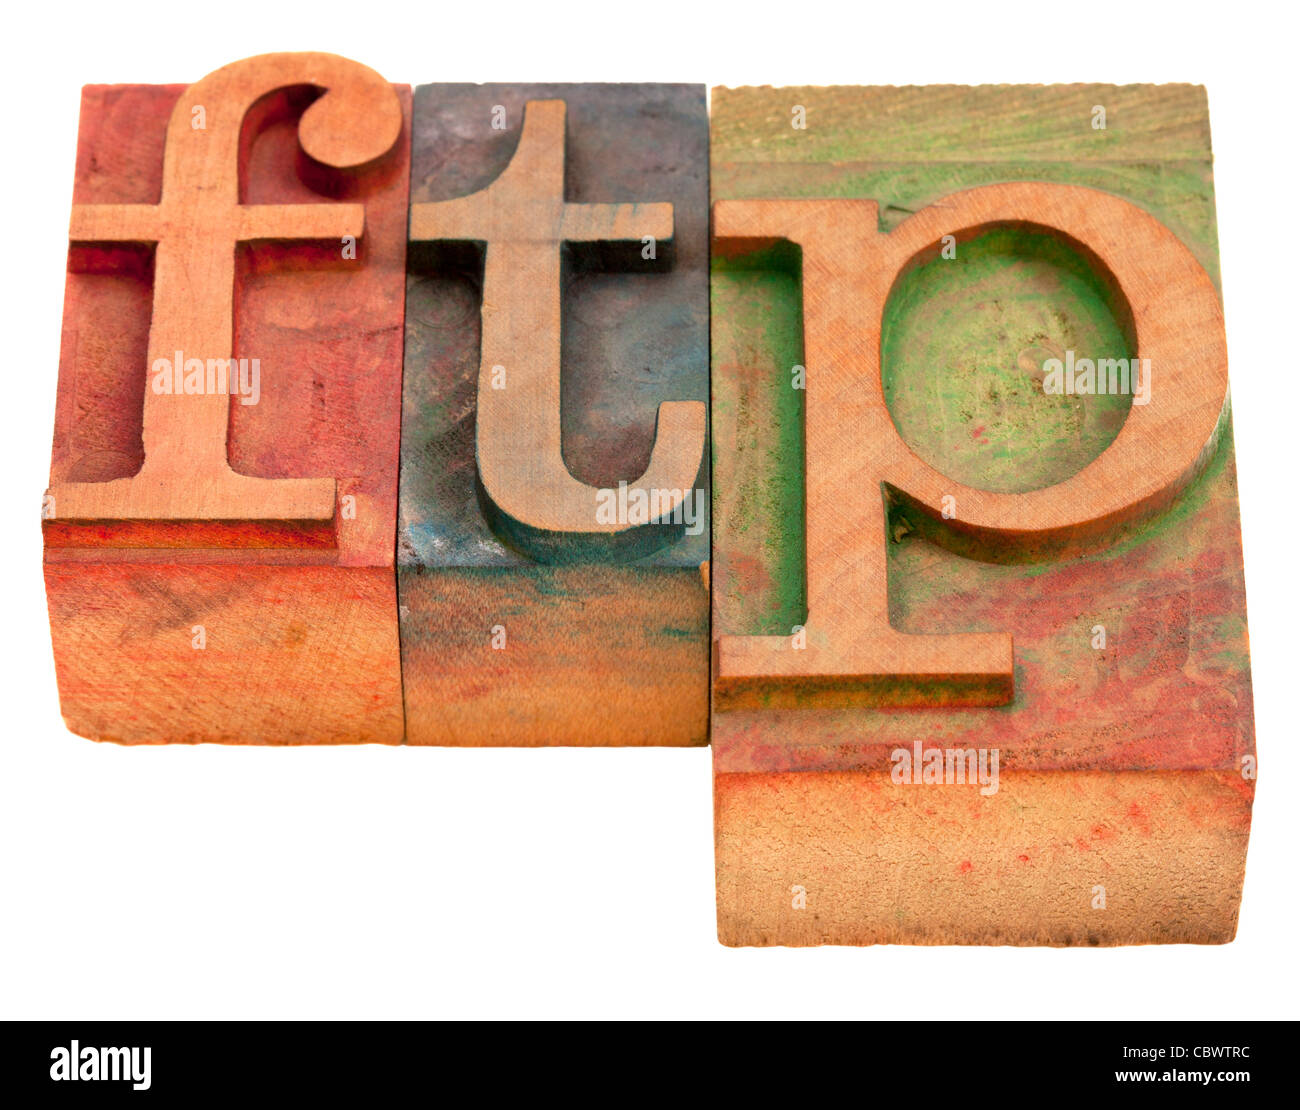 Ftp (file transfer protocol) - mot en bois blocs typographie vintage isolated on white Banque D'Images